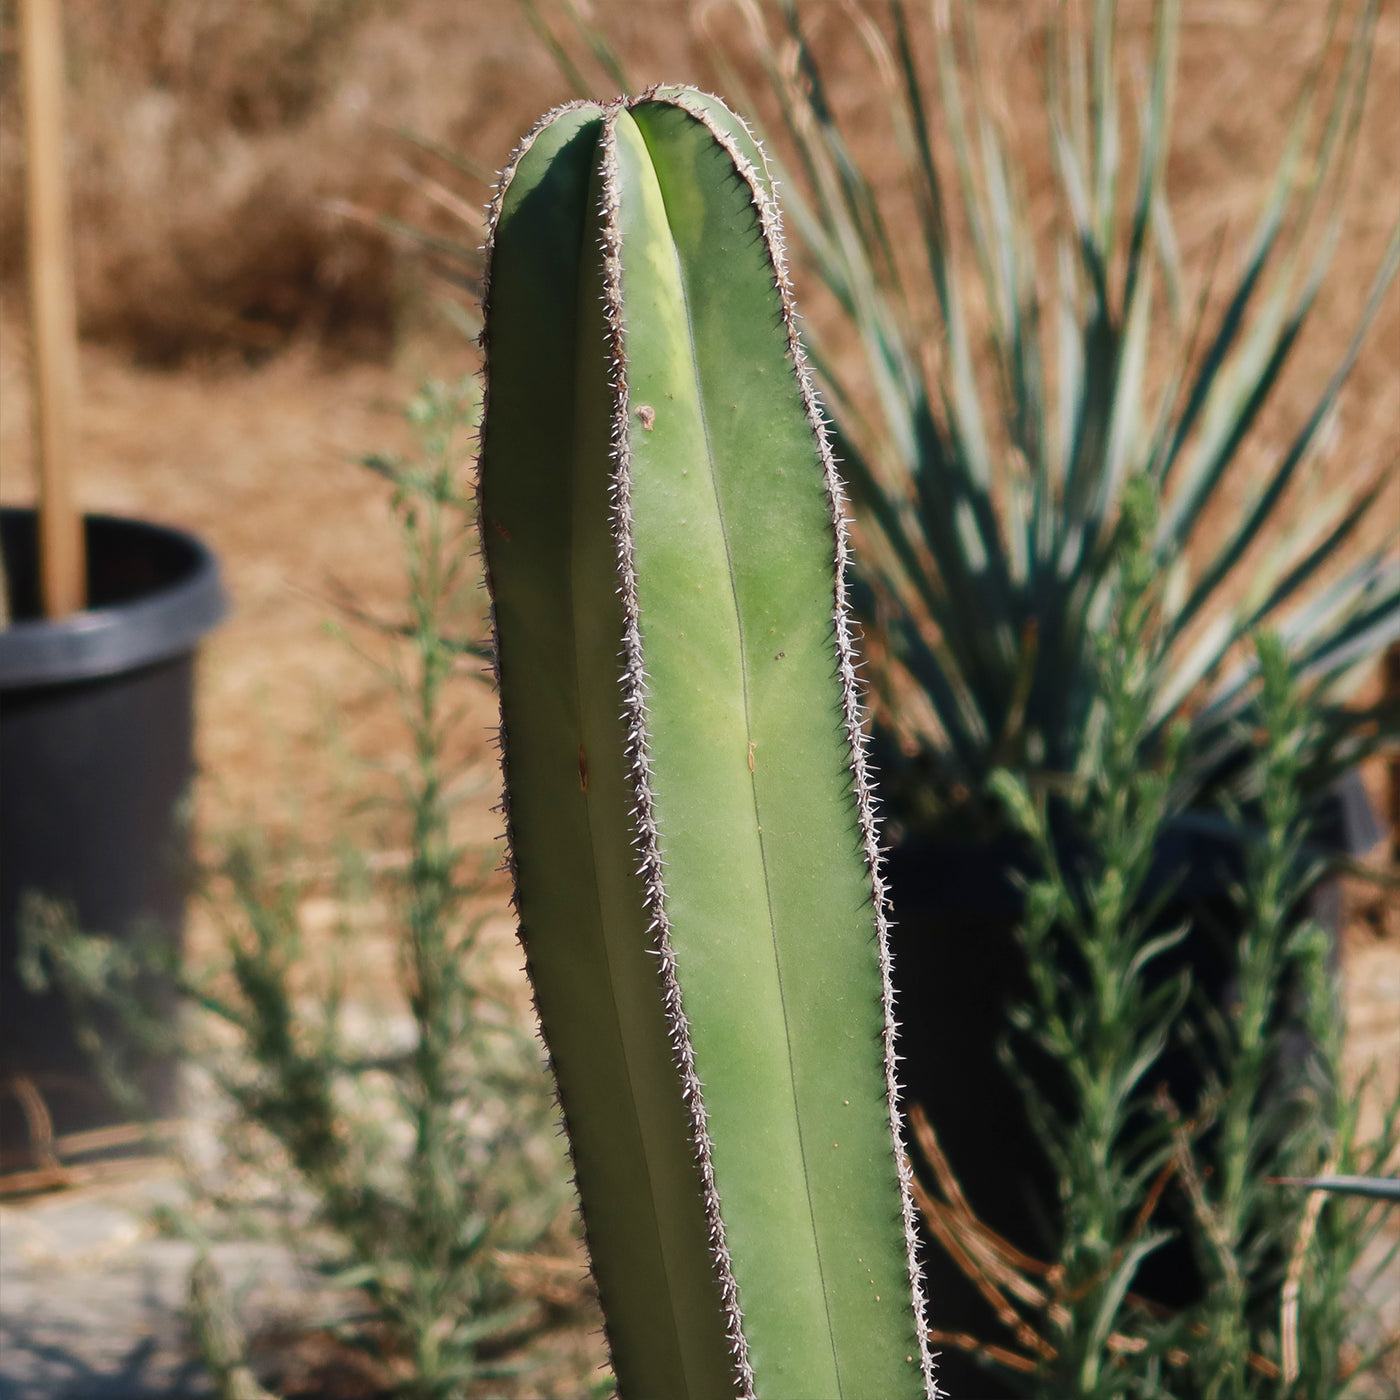 Mexican Fence Post Cactus 'Pachycereus marginatus'